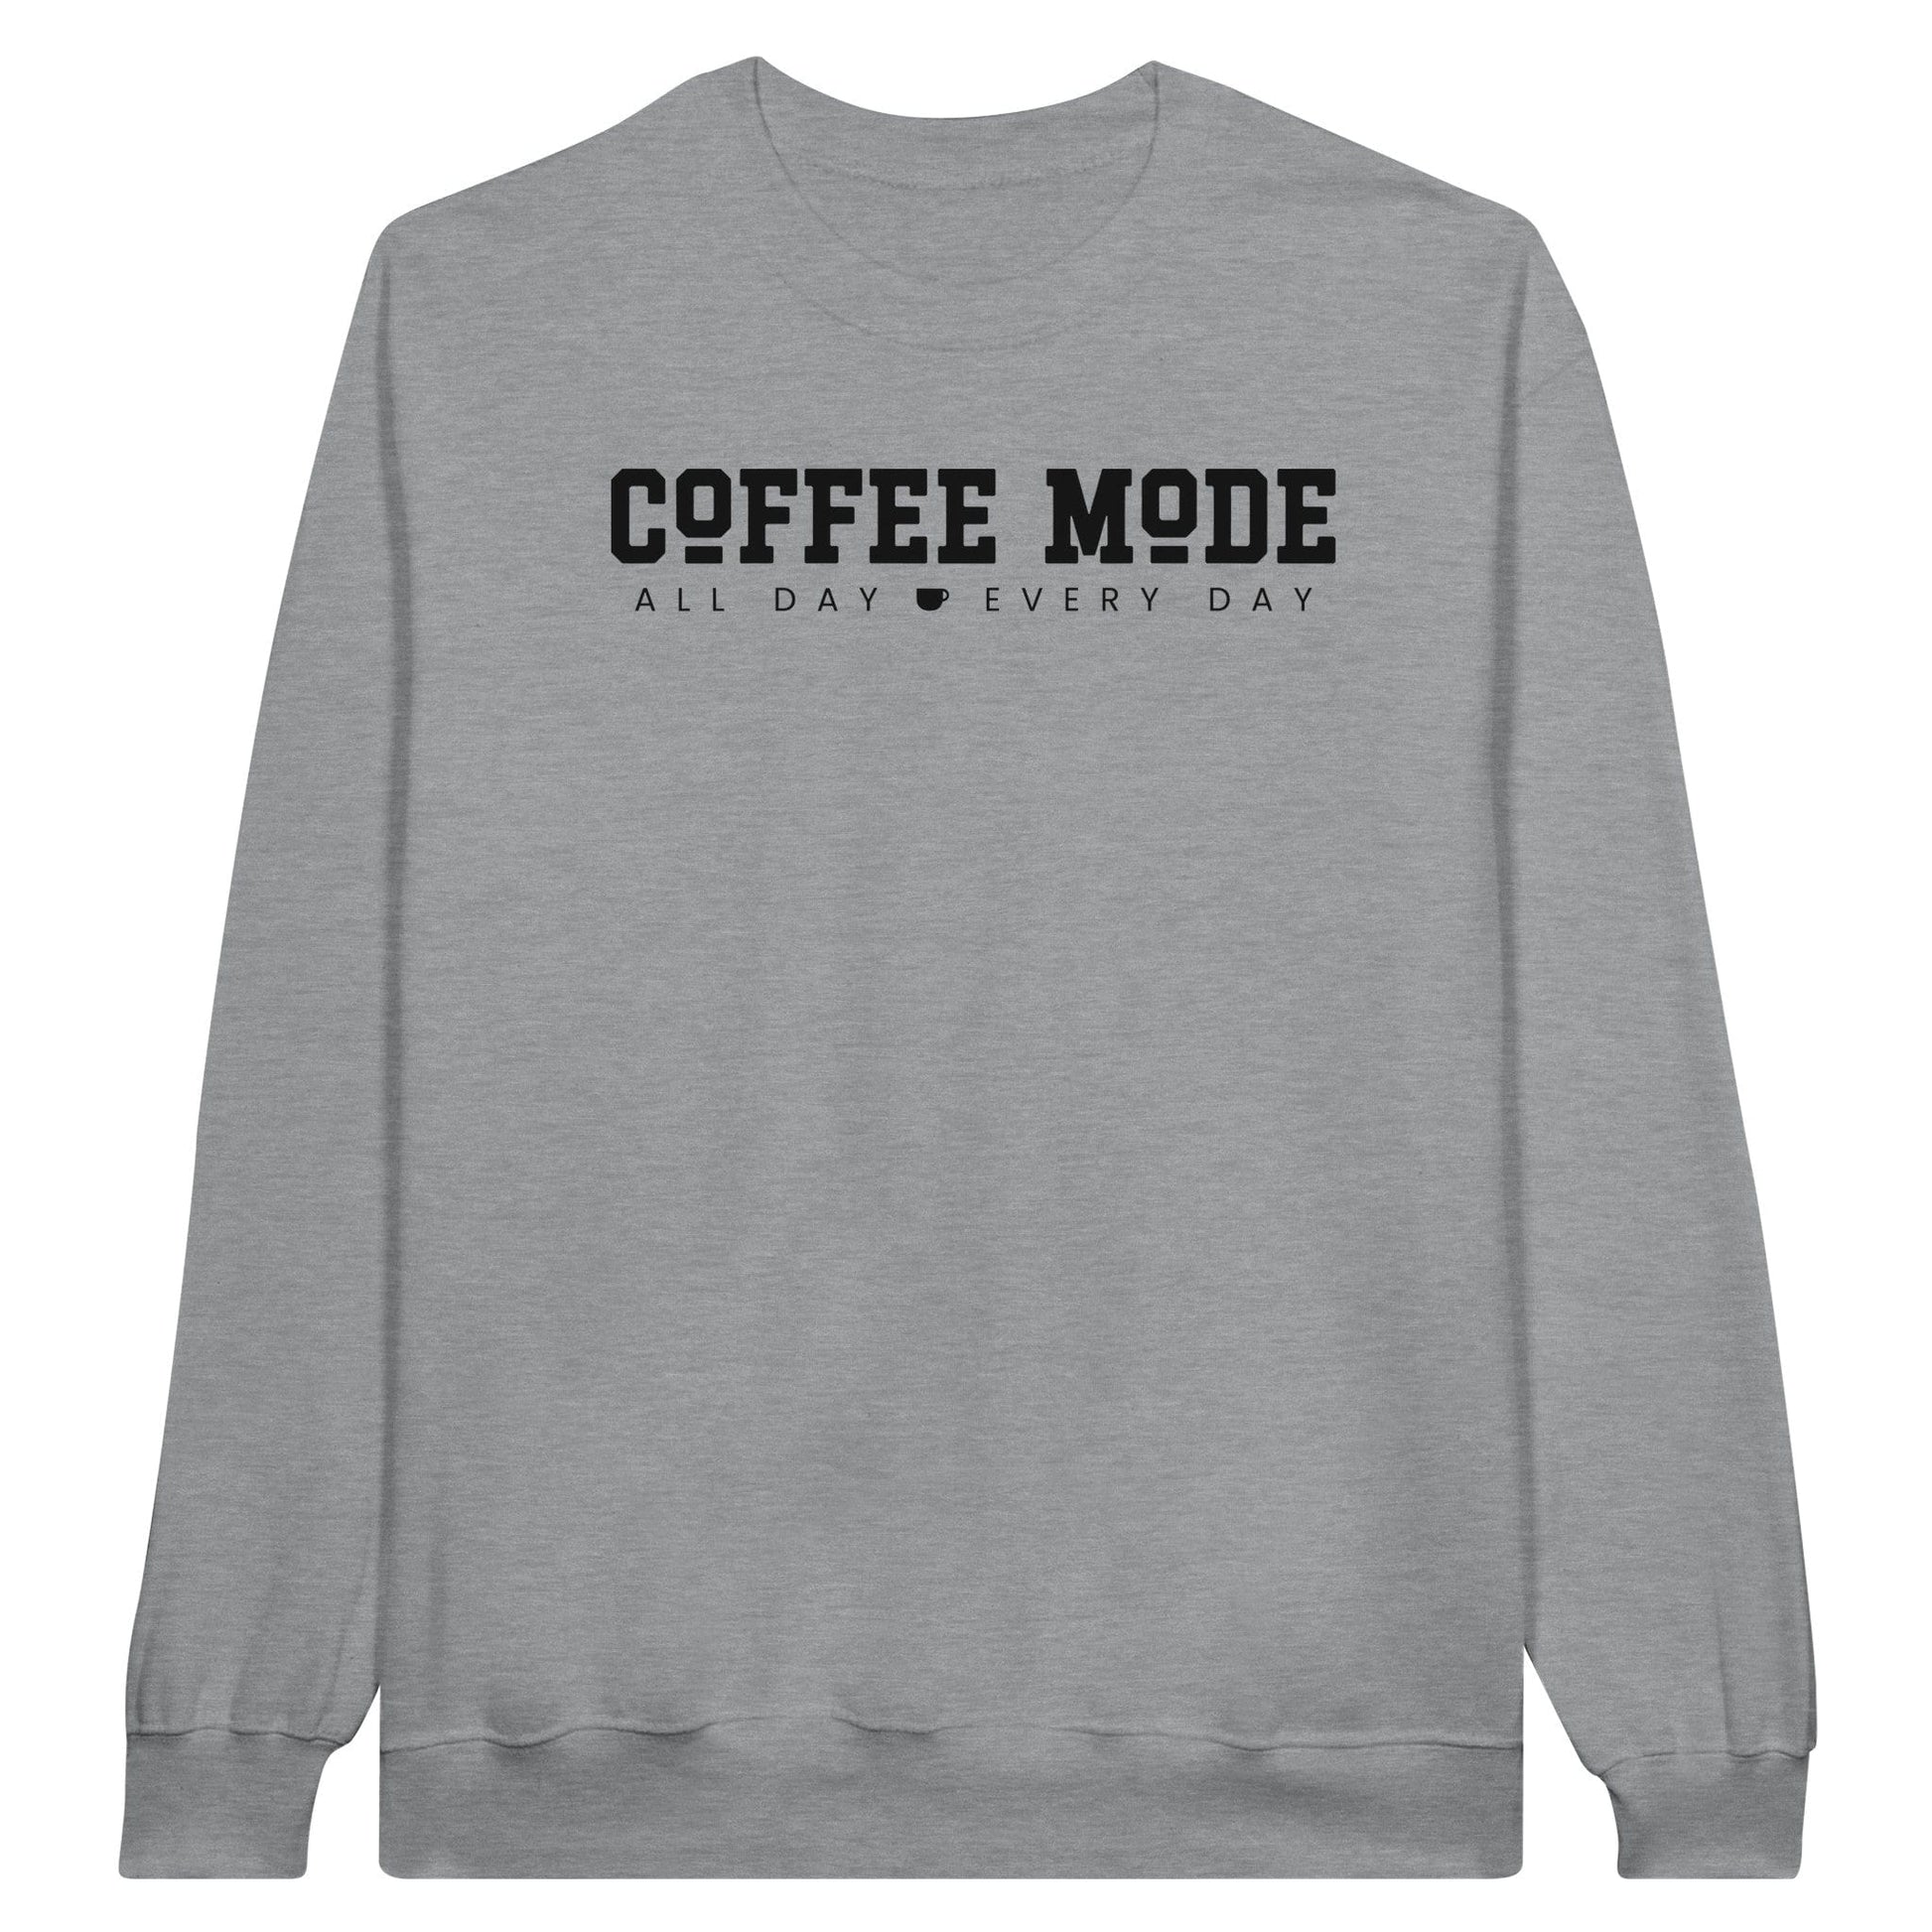 Good Bean Gifts "Coffee Mode" -Unisex Crewneck Sweatshirt Sports Grey / M